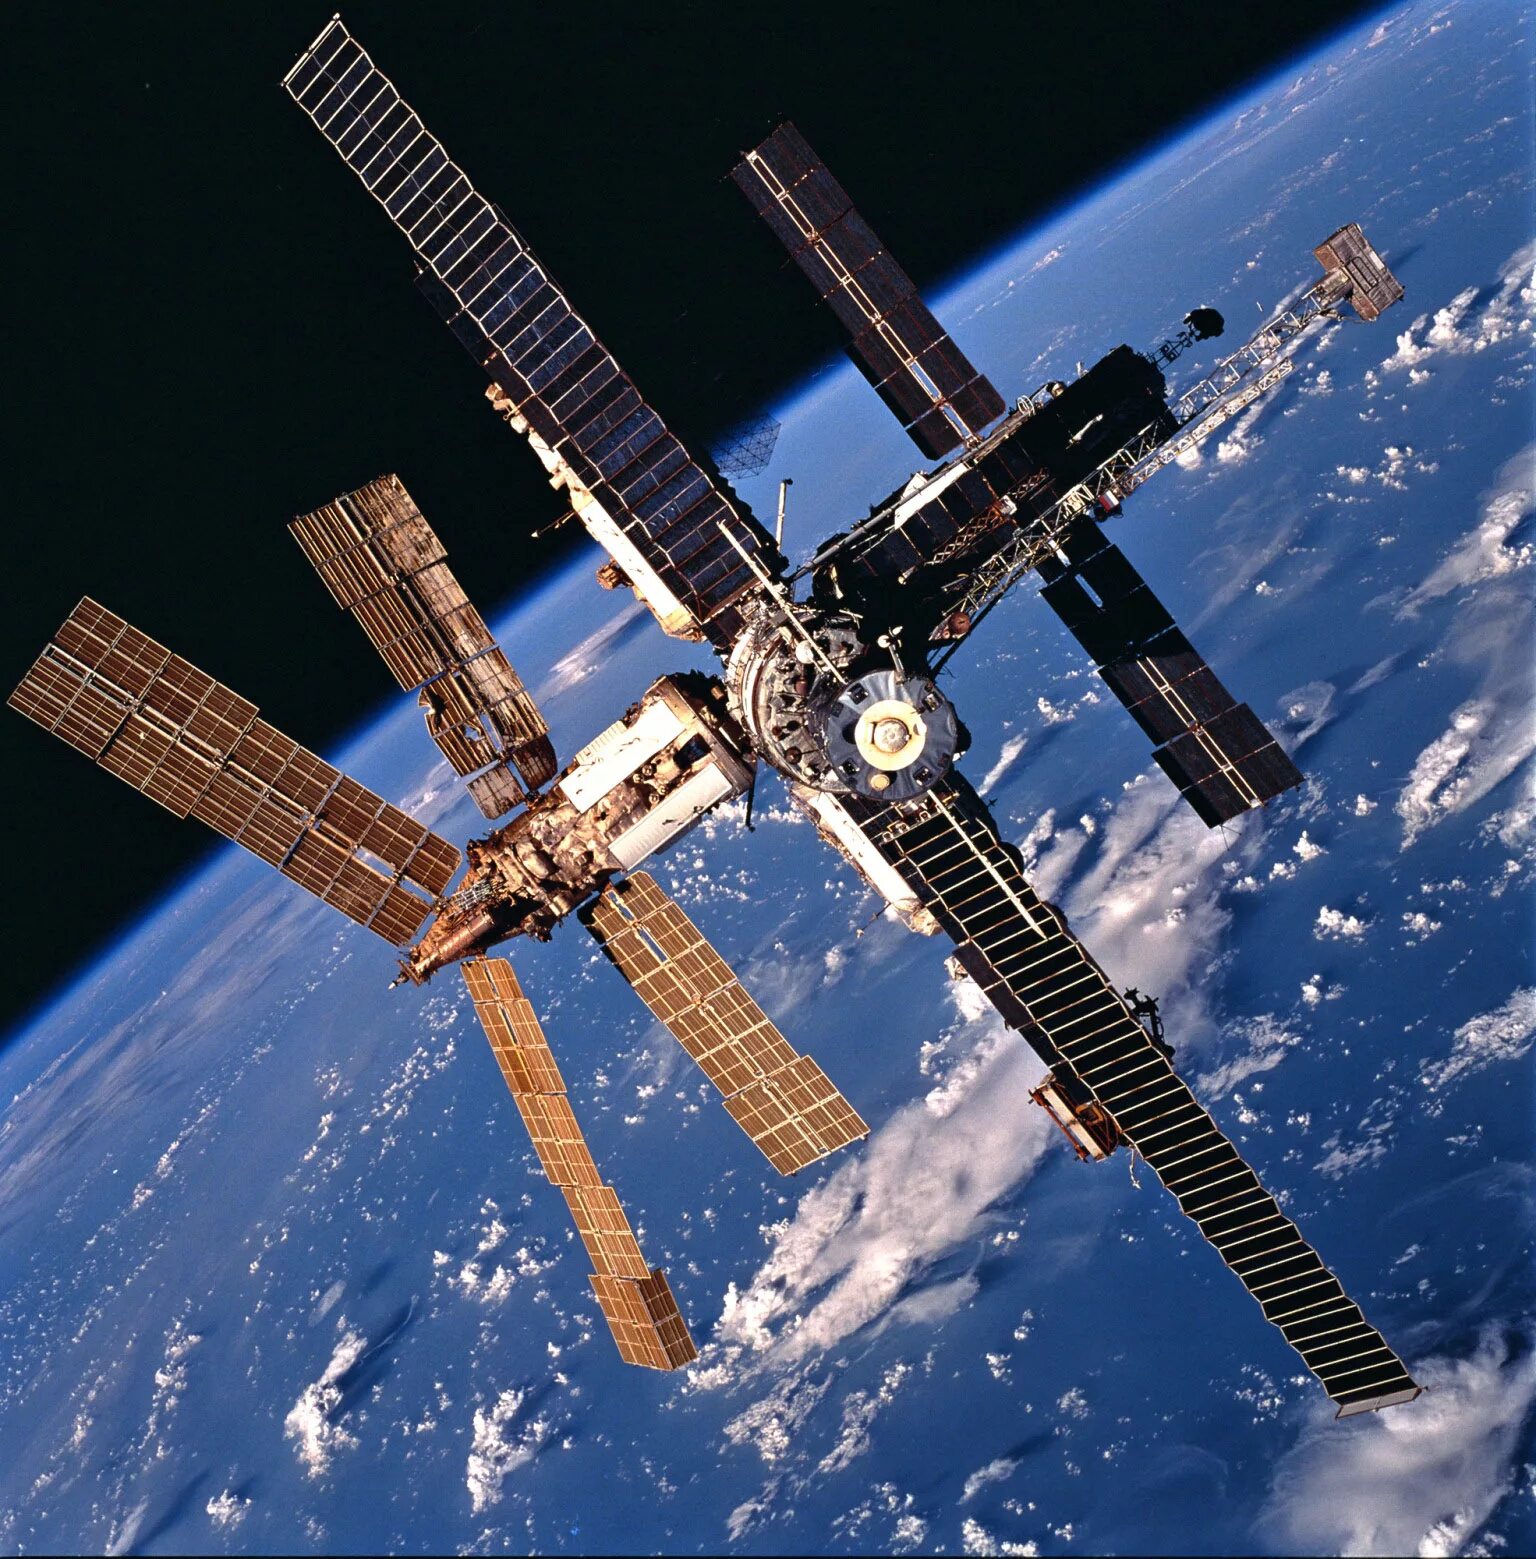 Mir. Орбитальная станция мир 1986. Международная Космическая станция МКС. Космическая орбитальная станция МКС. МКС 2000 года.